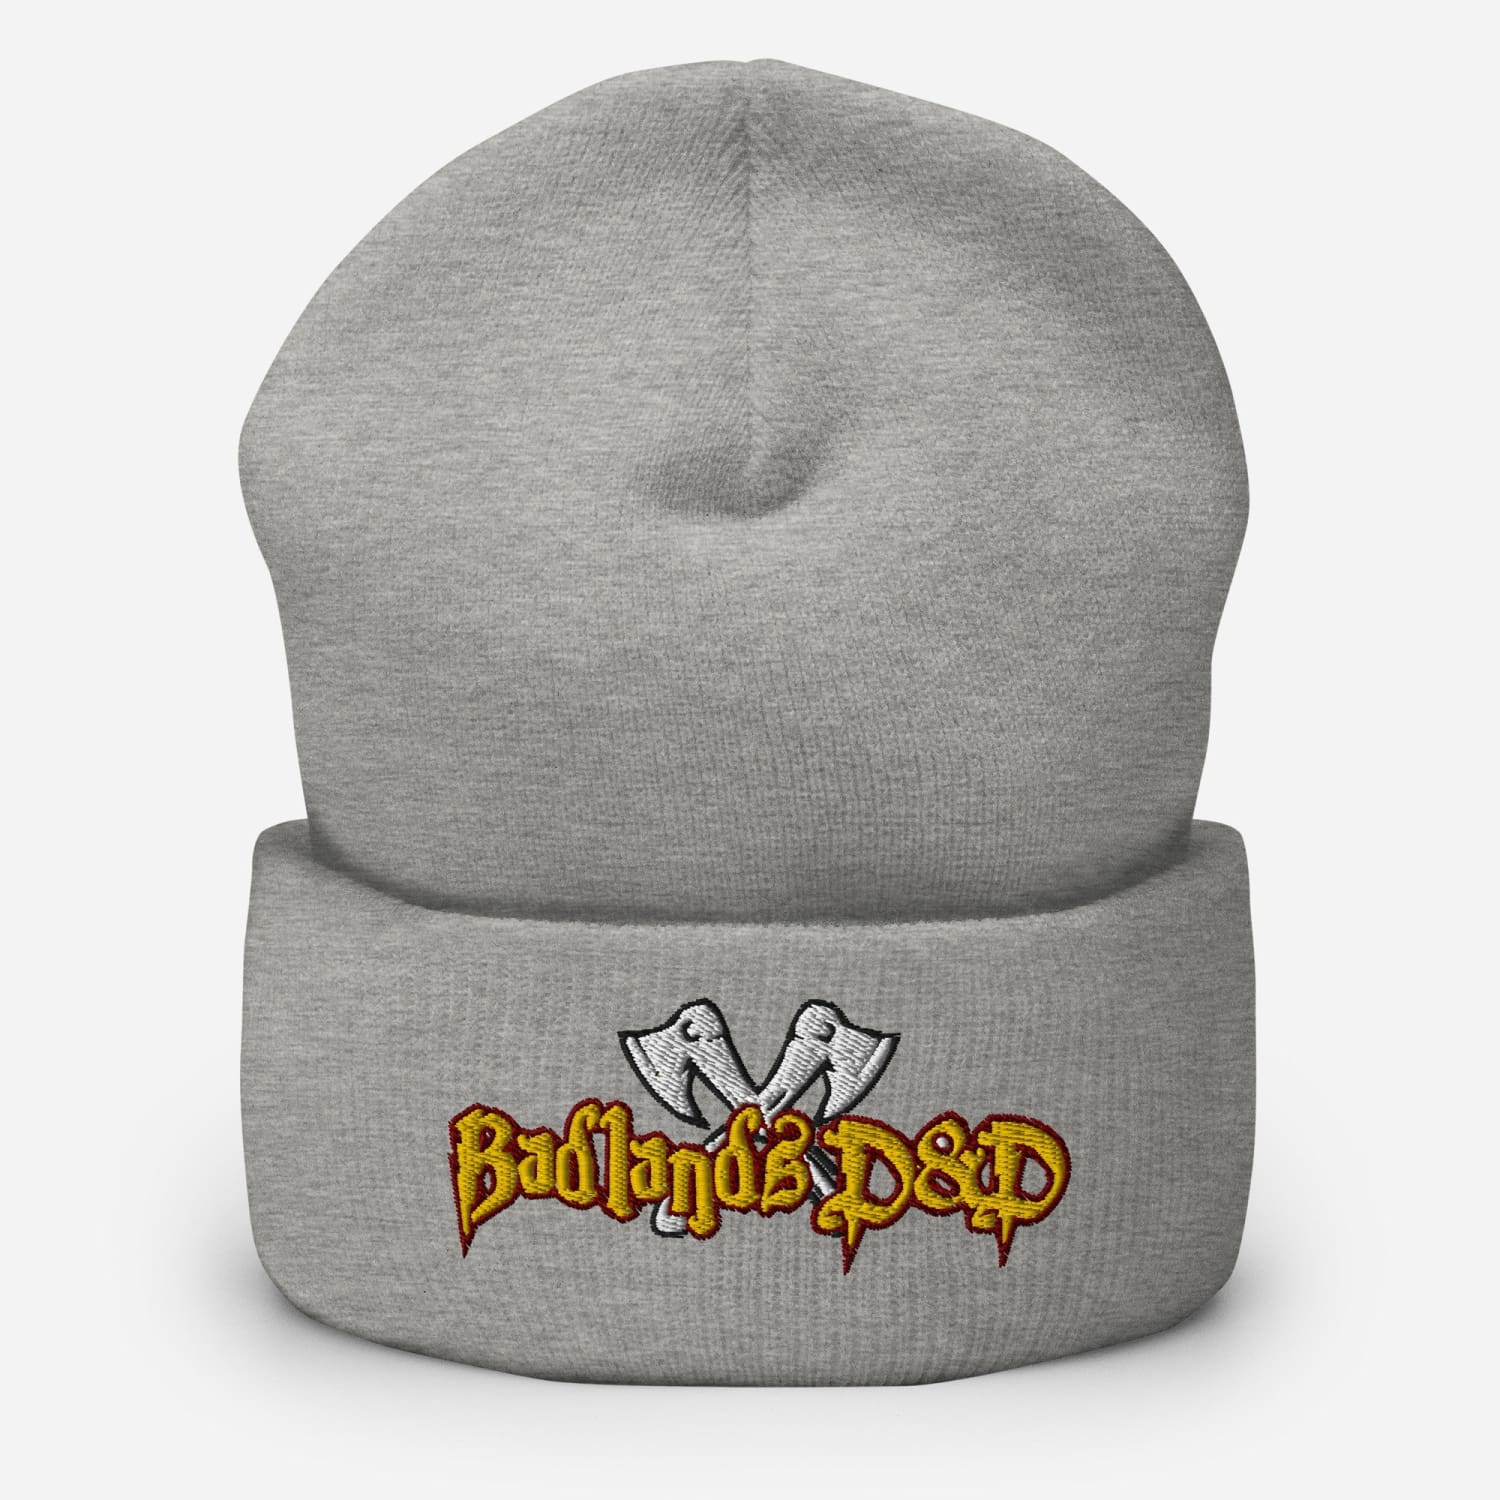 Badlands D&D Logo Cuffed Knit Beanie / Tuque - Heather Grey